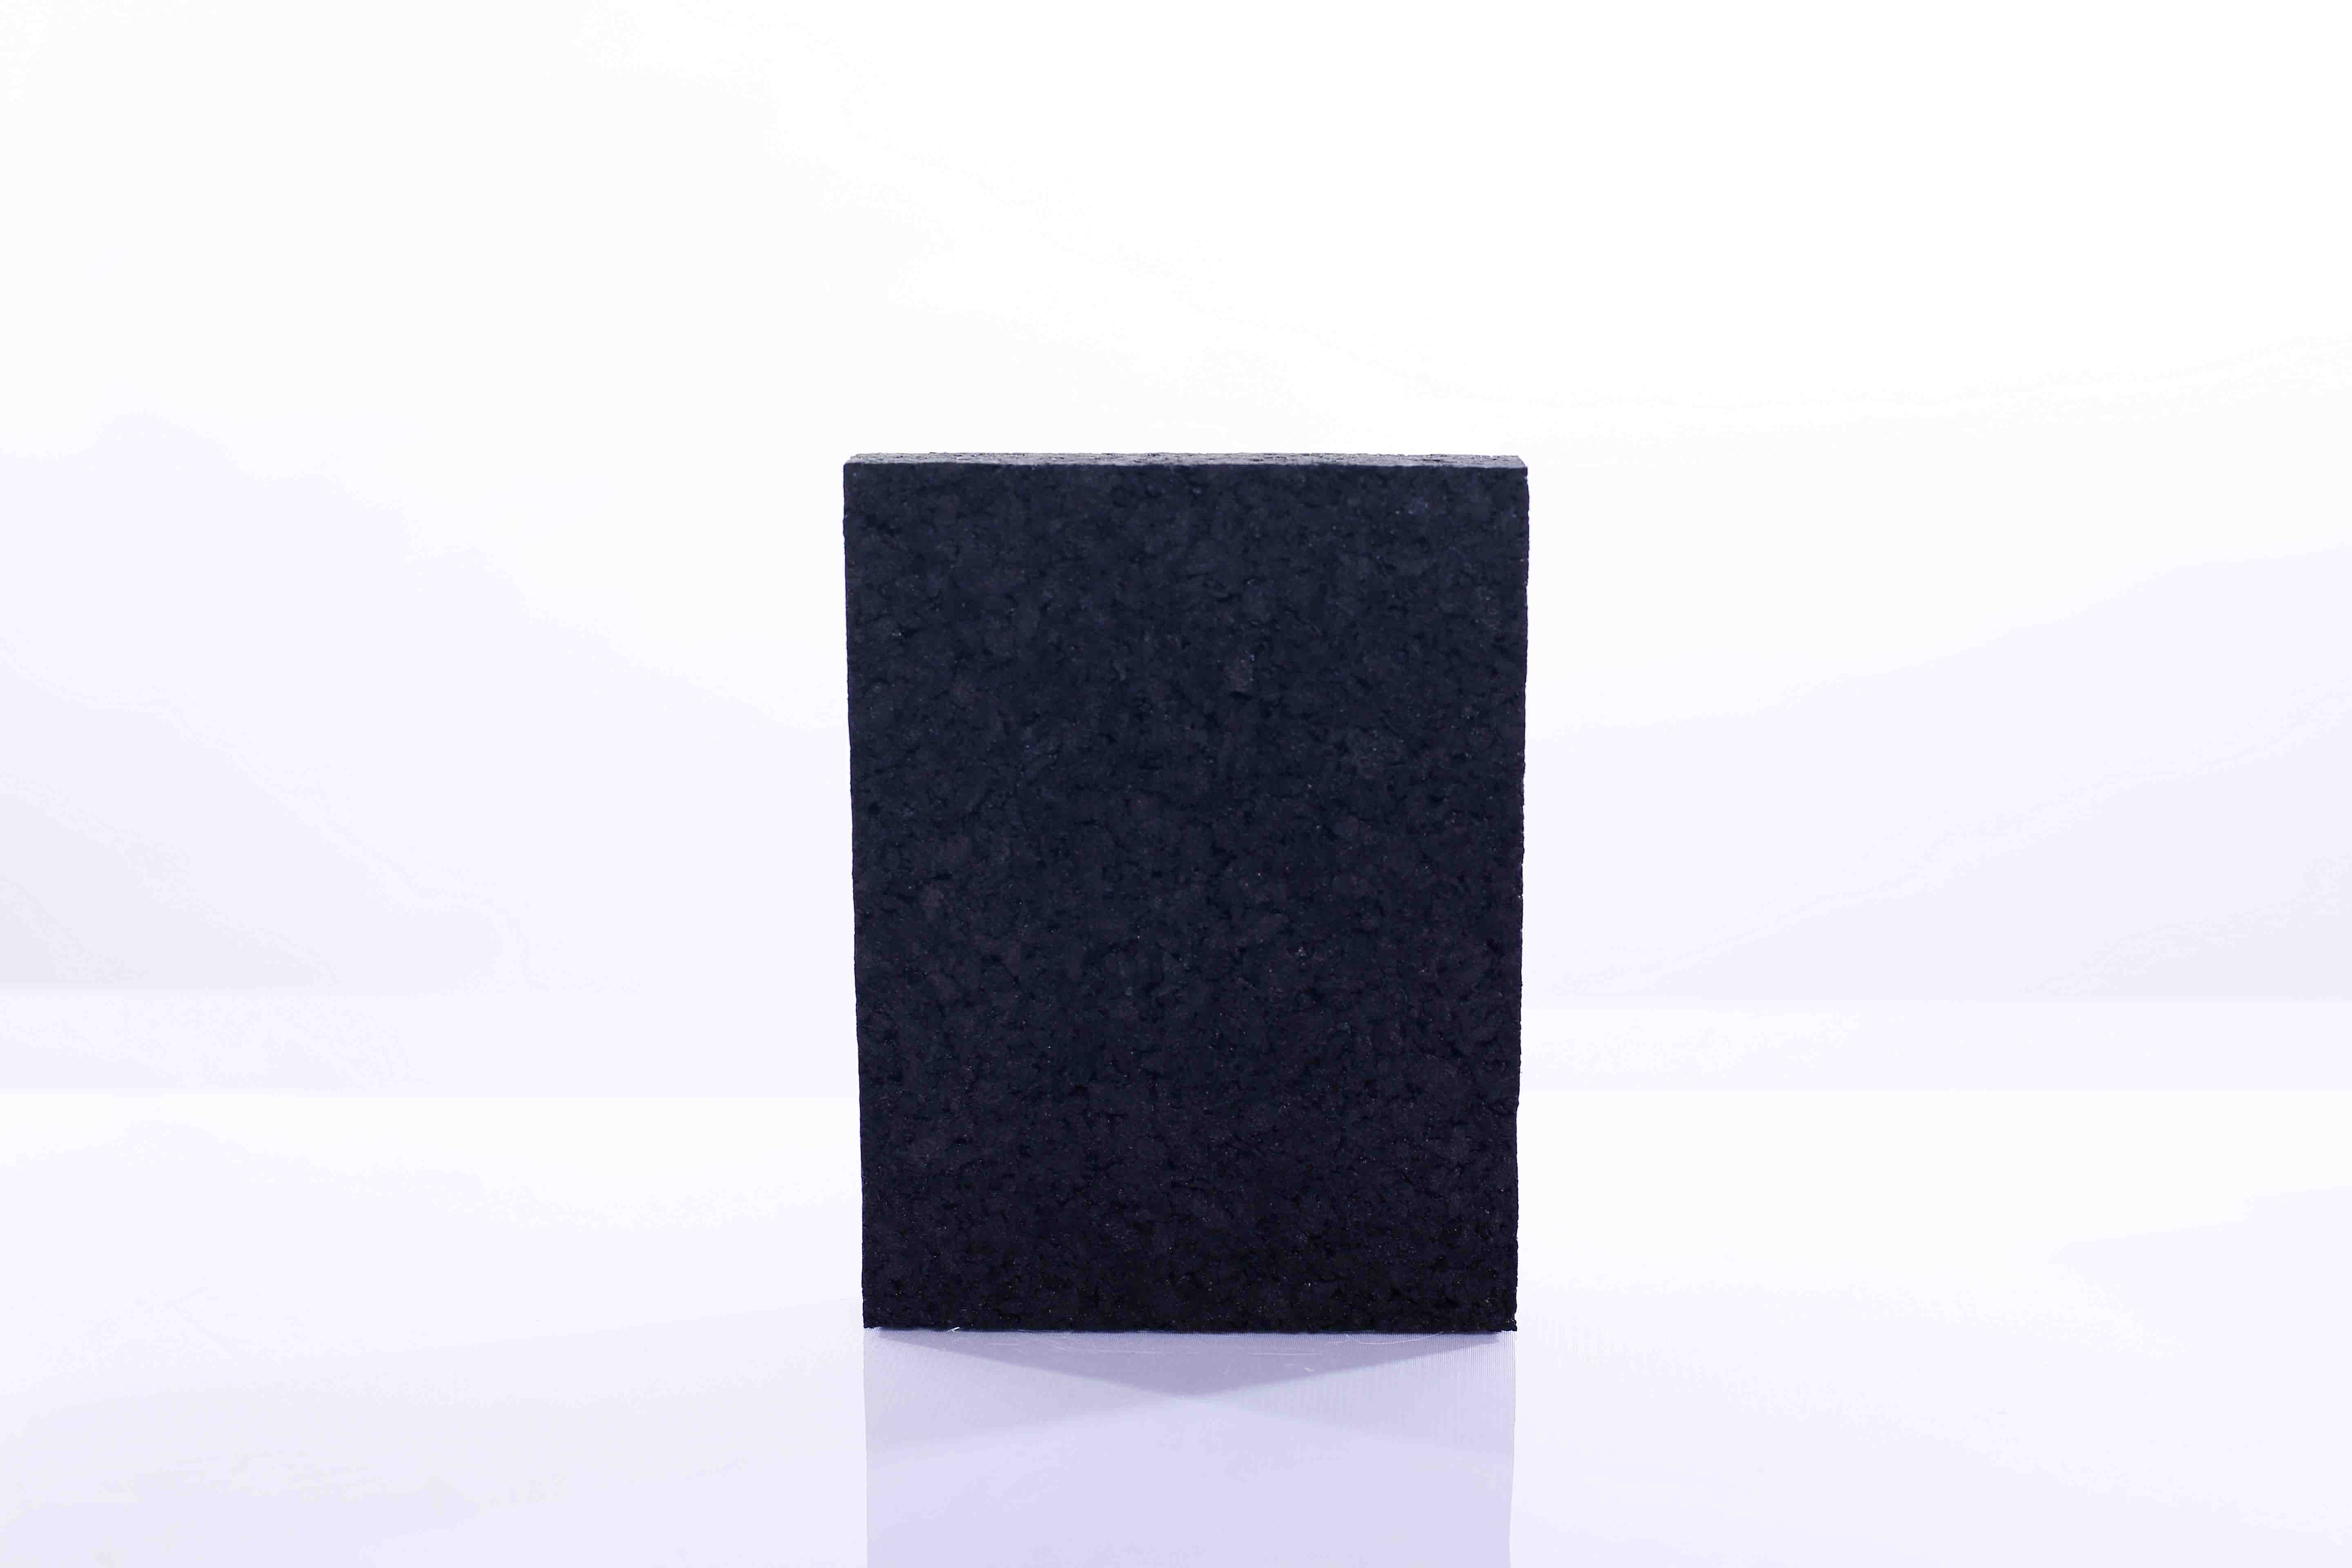 Flexible rubber foam soundproof insulation